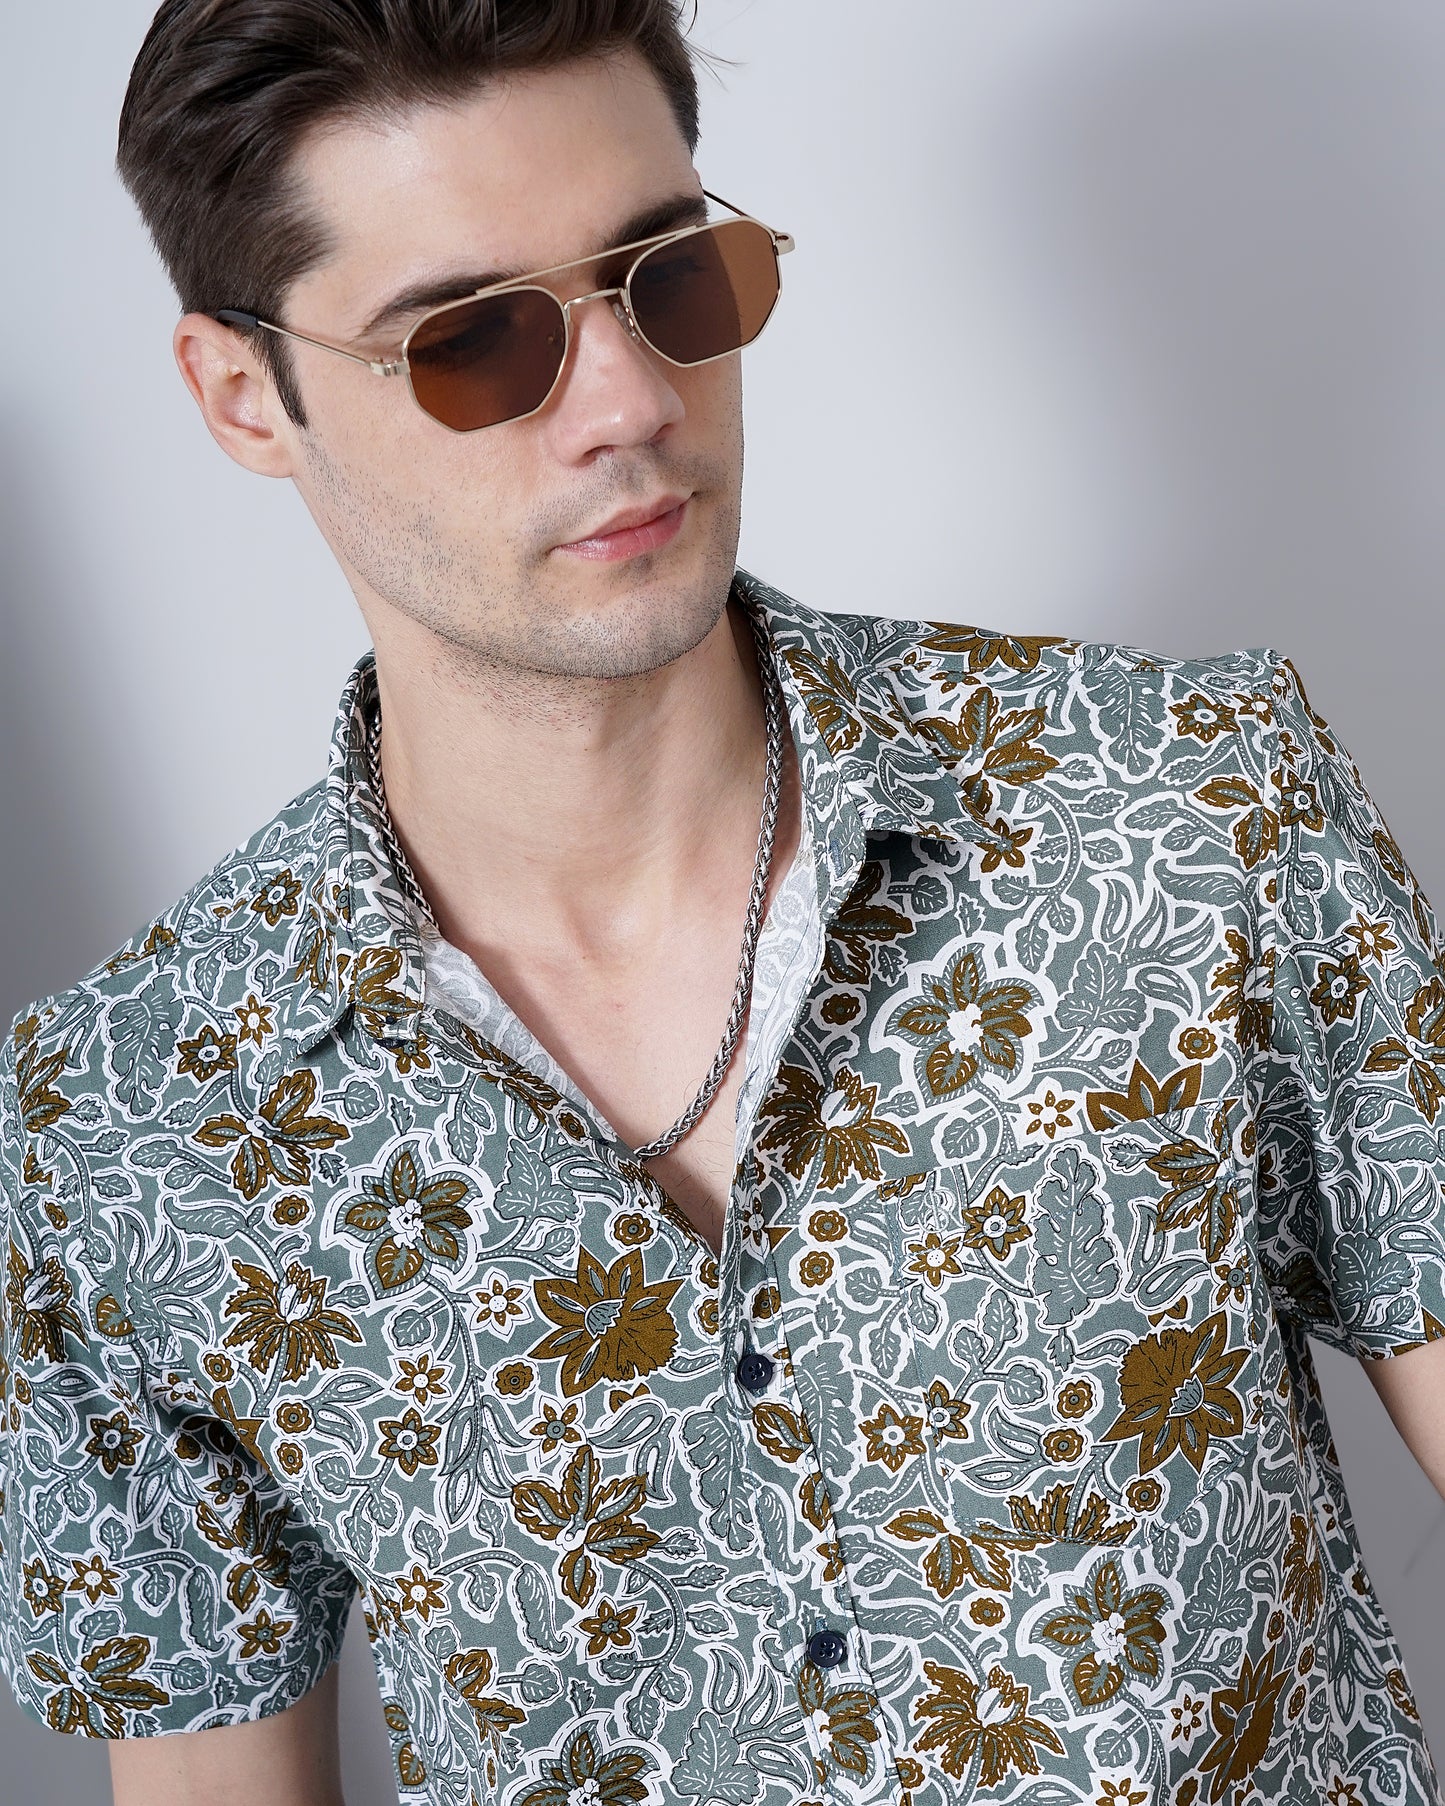 Casper Floral Print Shirt for Men 